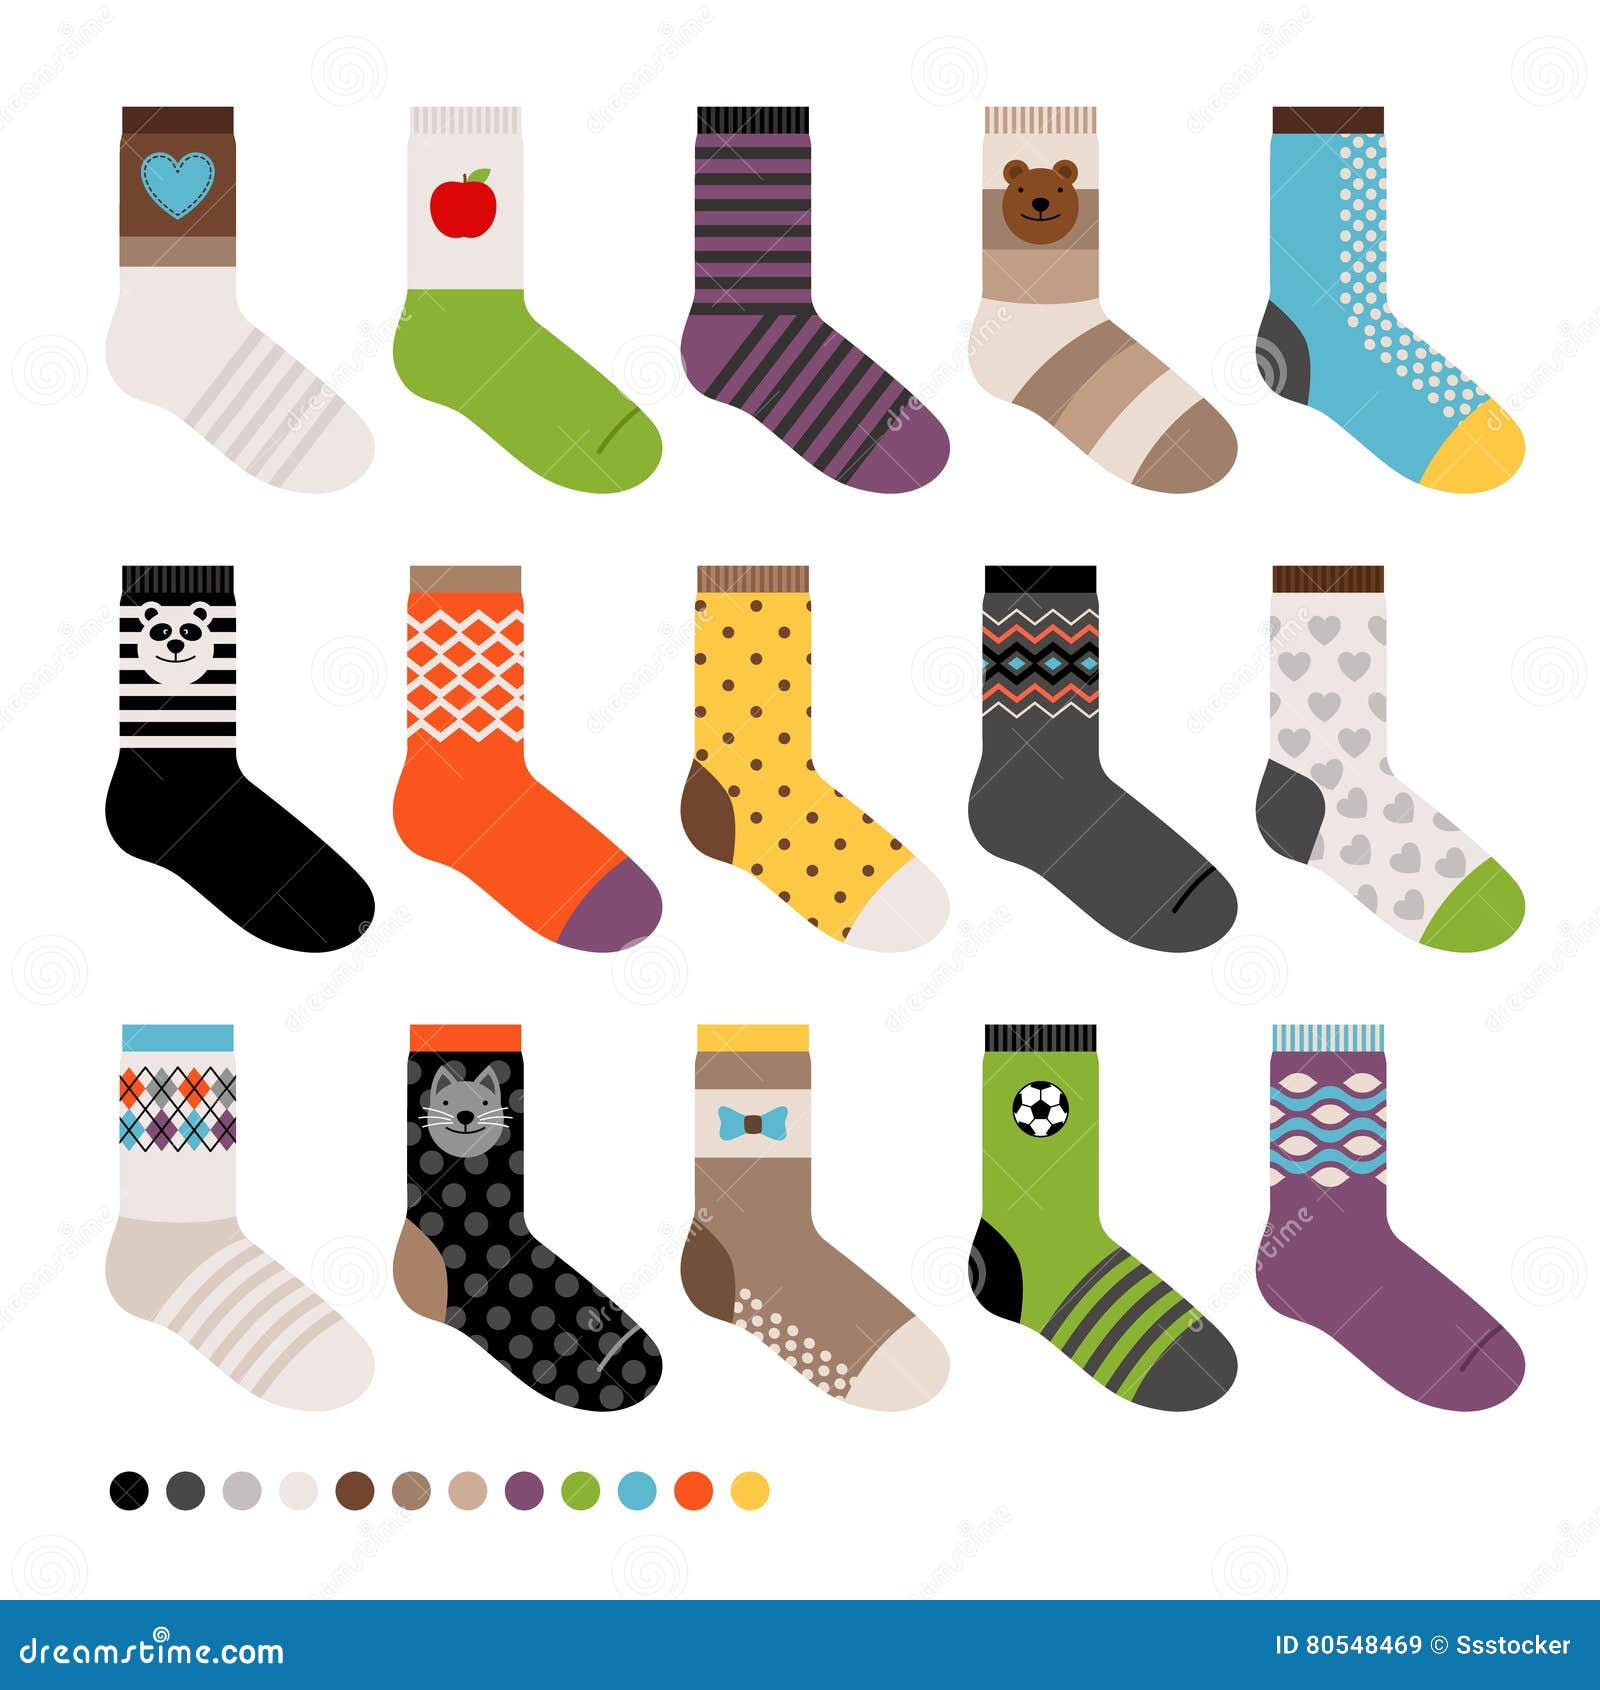 Childrens socks icon set stock vector. Illustration of cotton - 80548469